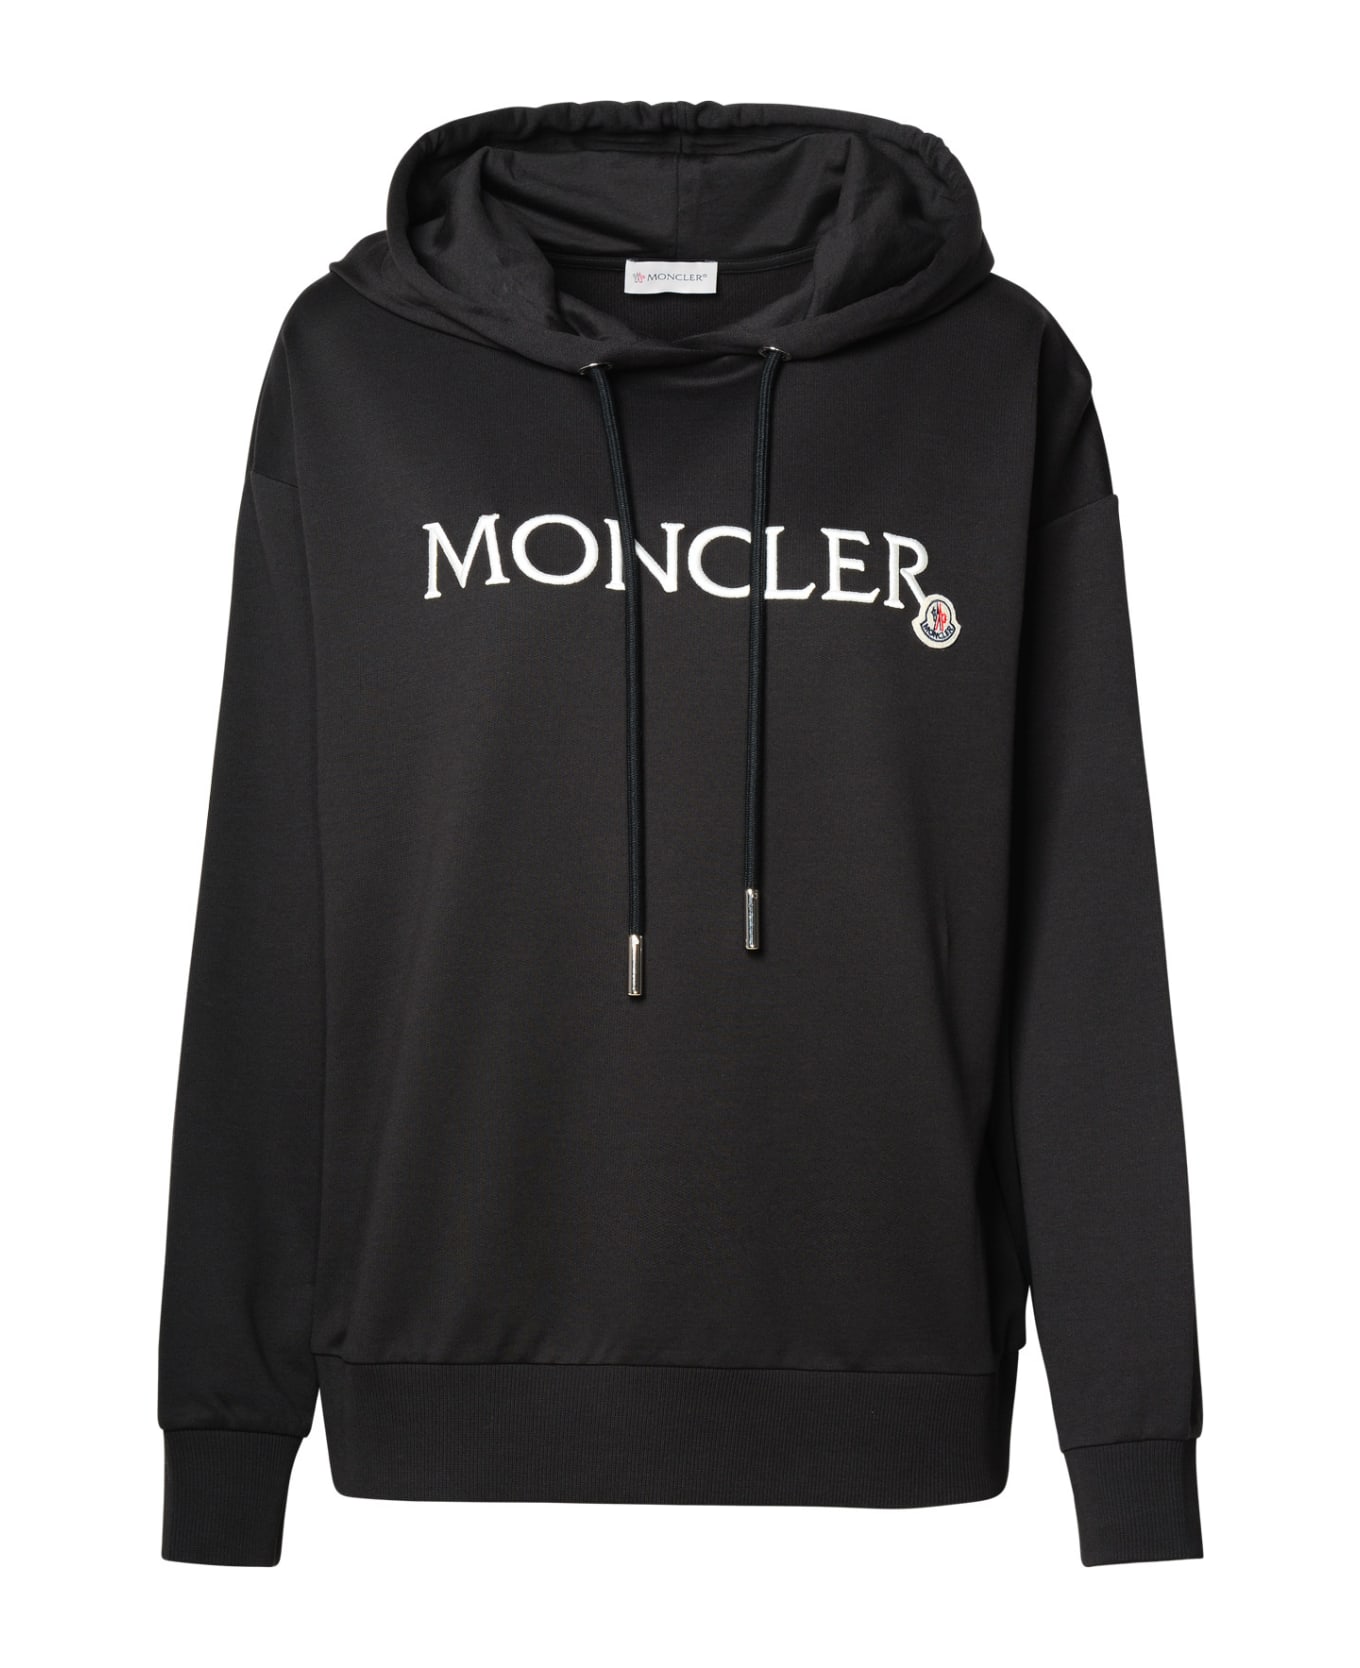 Moncler Black Cotton Sweatshirt - Black